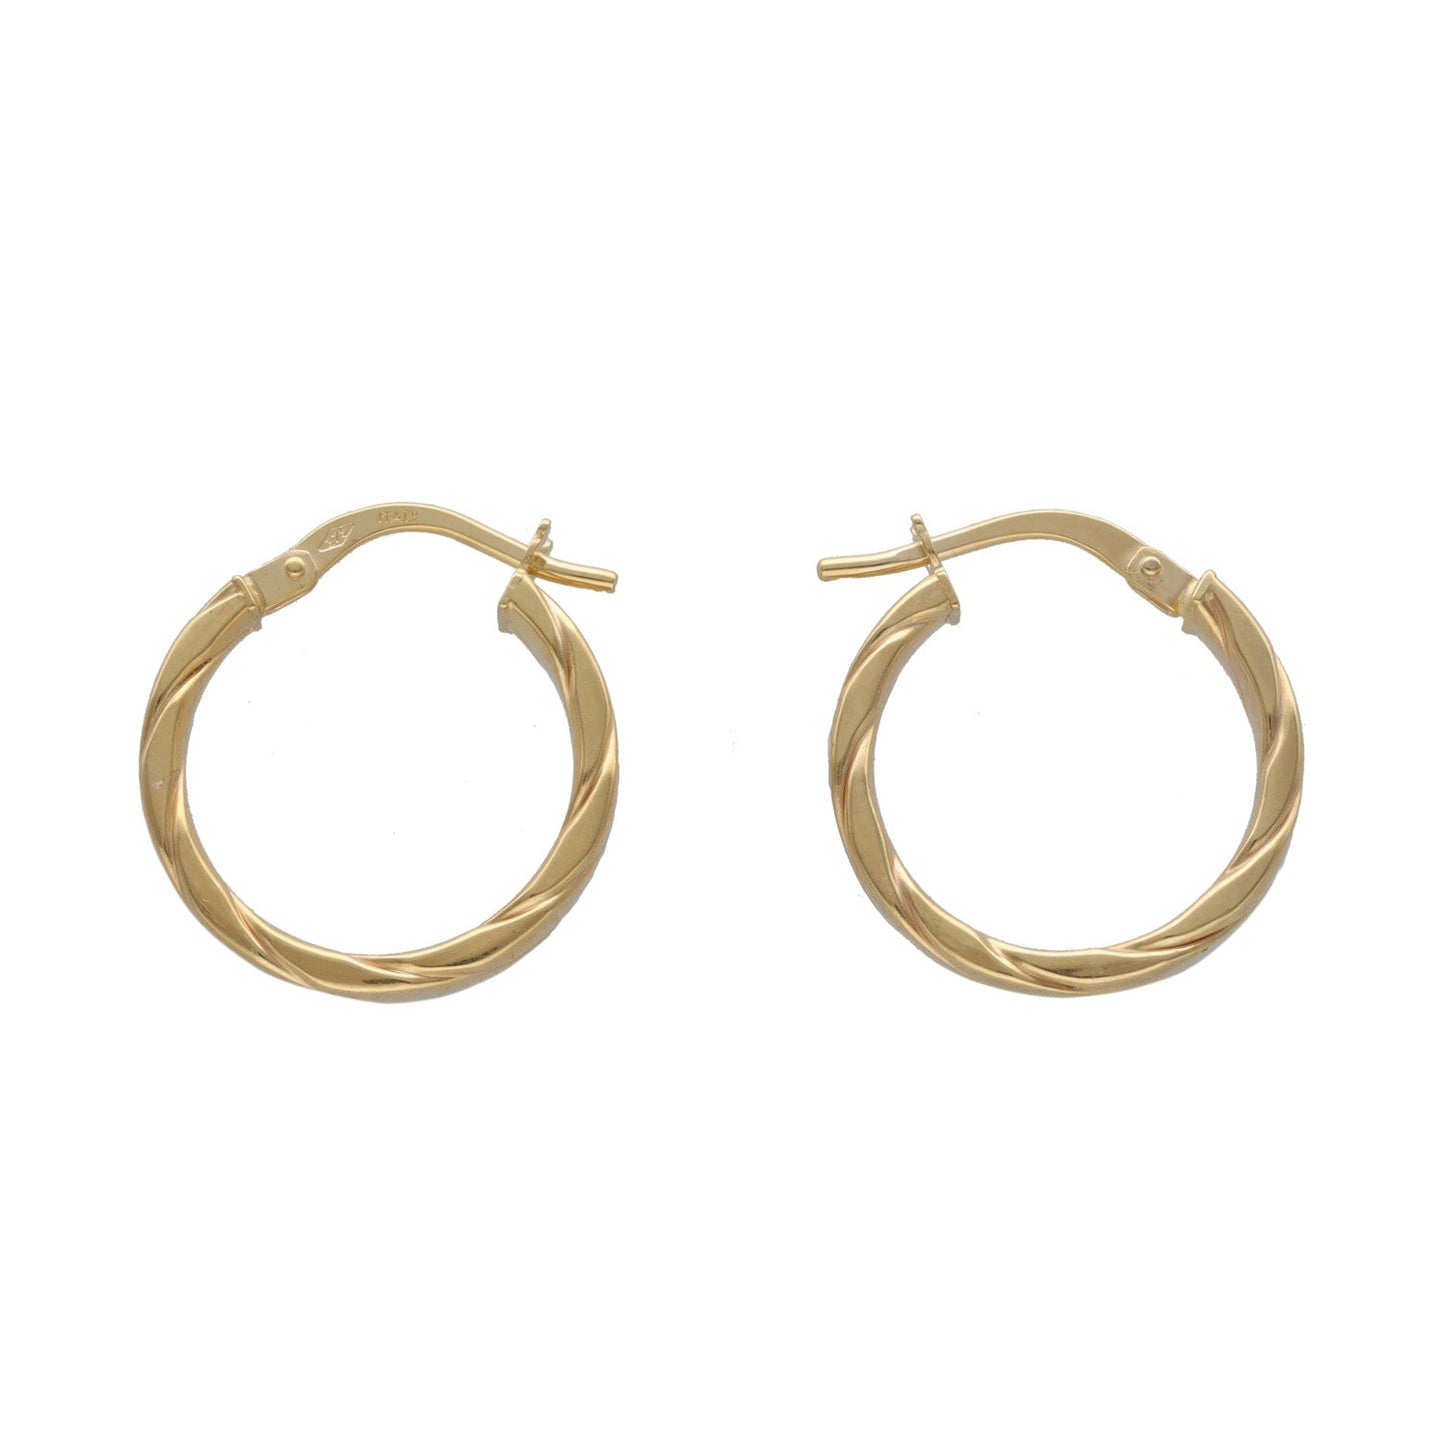 New 9ct Gold Twist Hoop Earrings